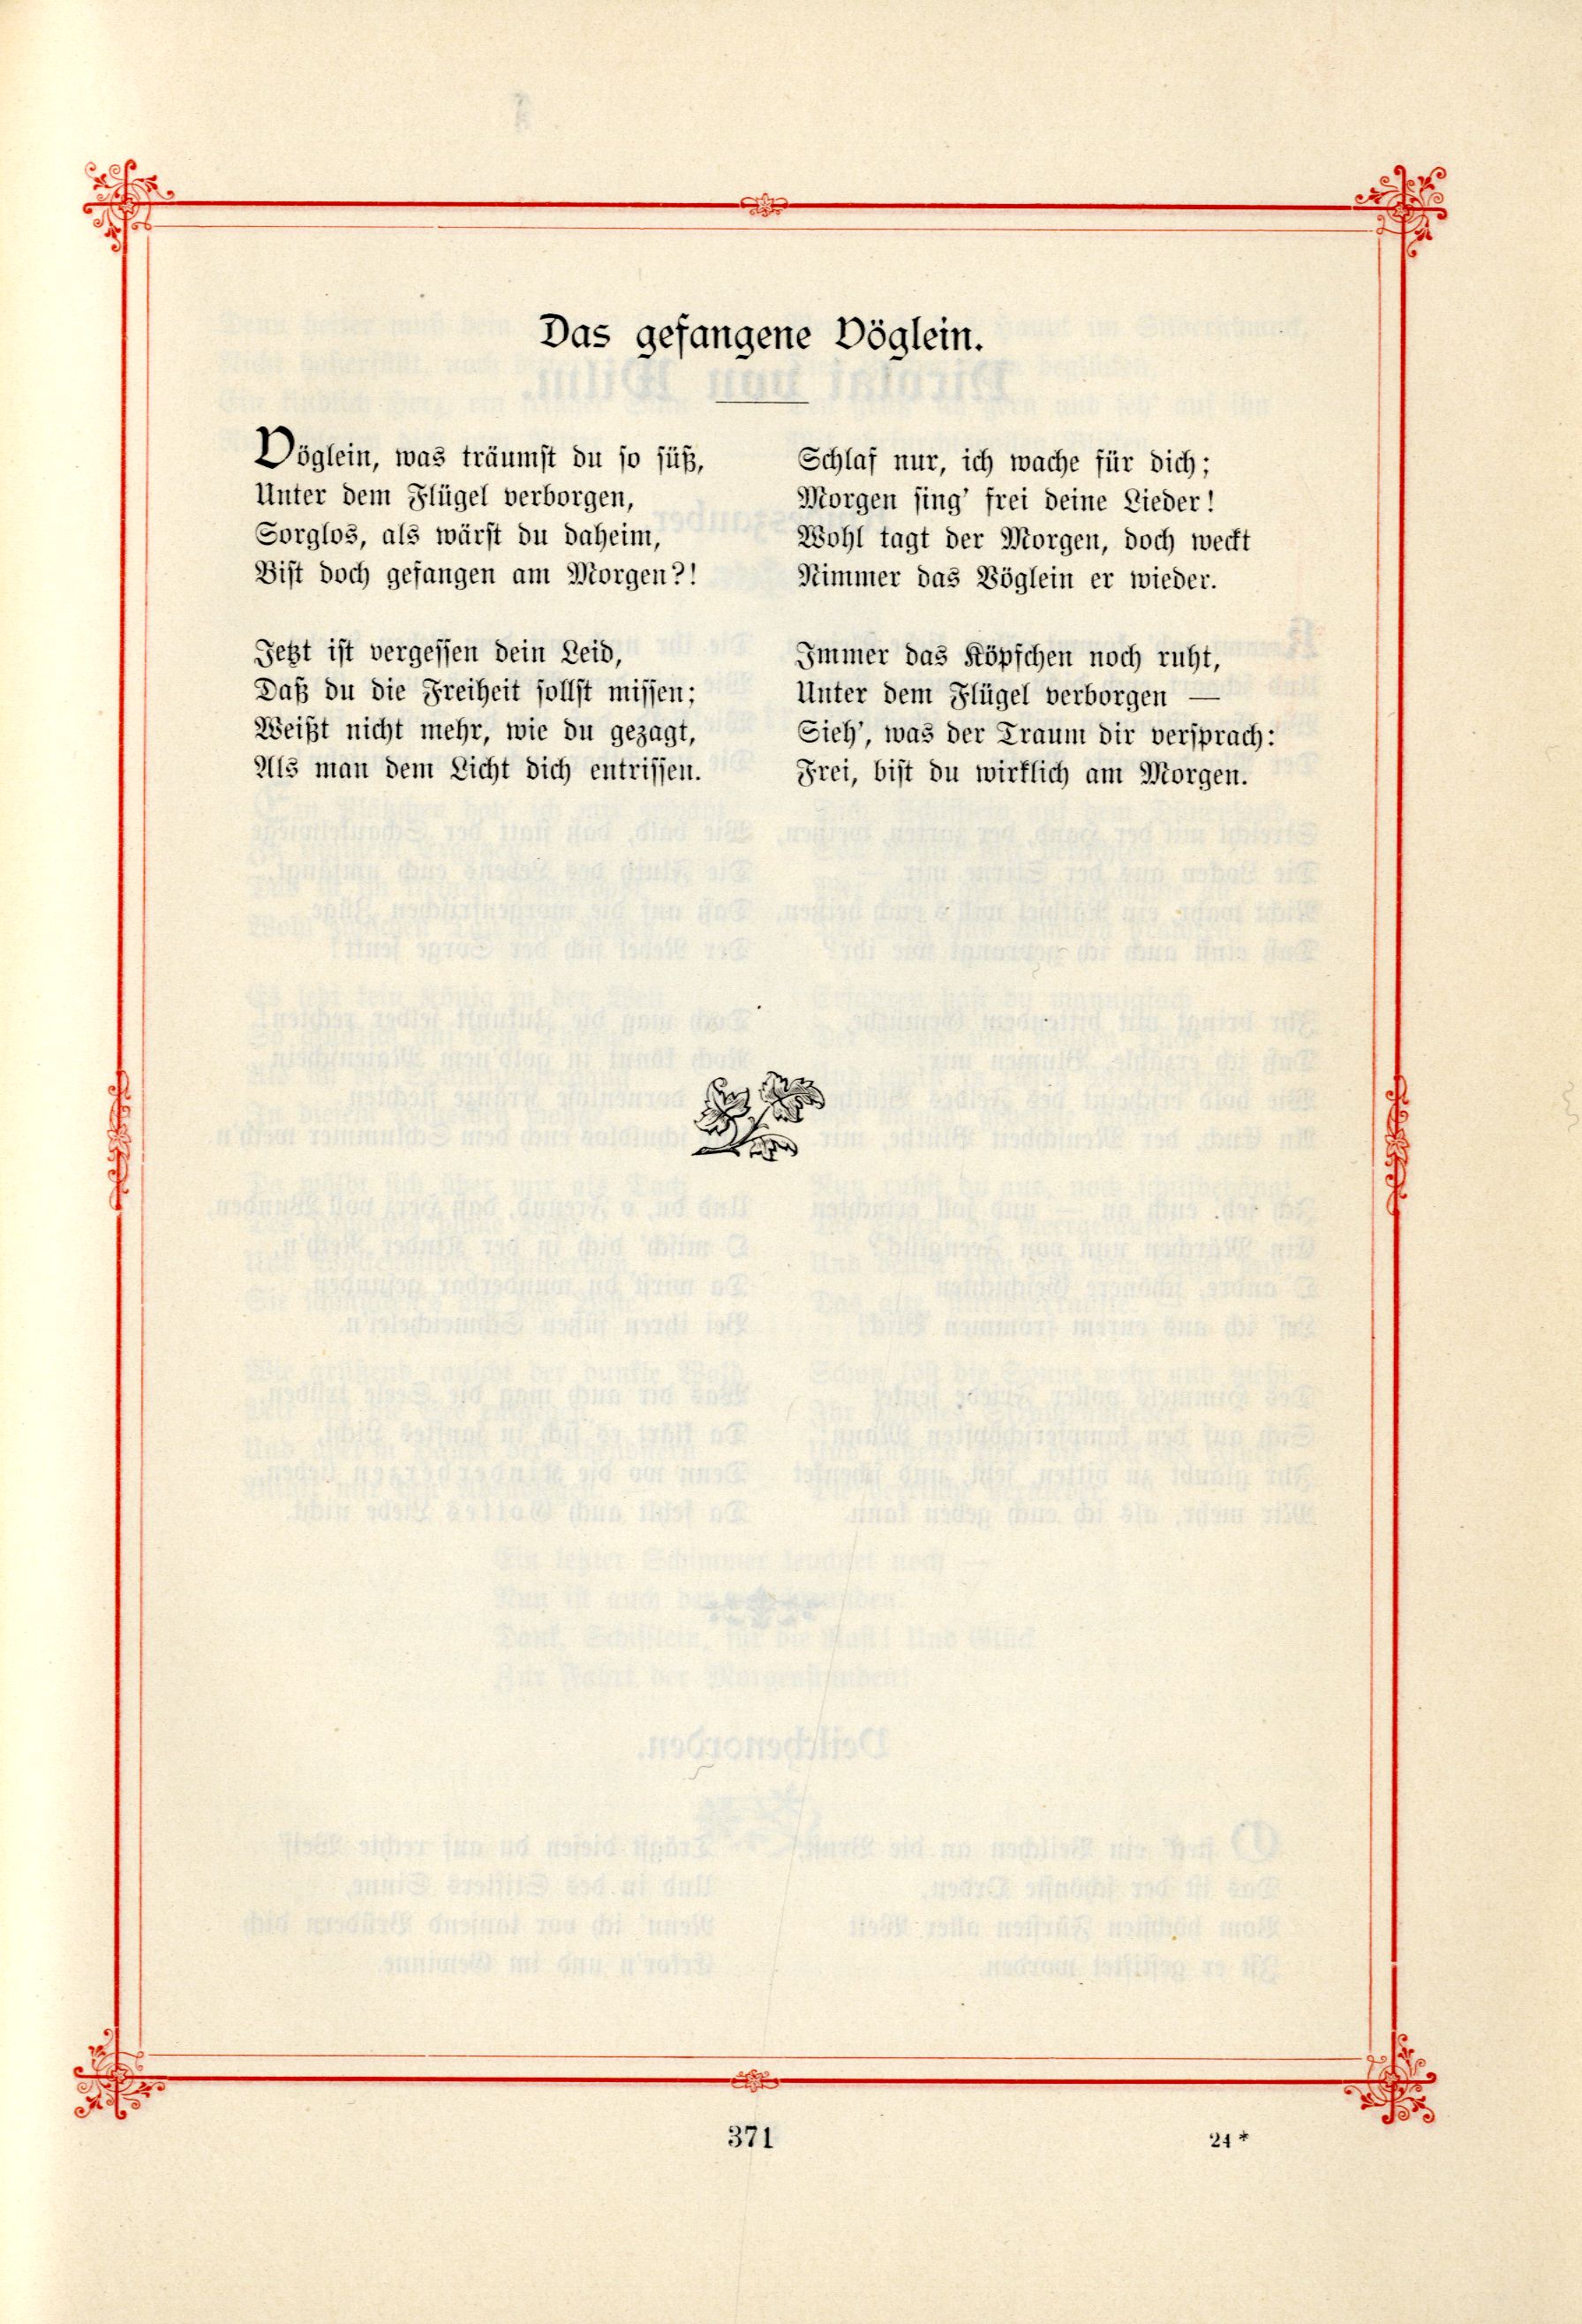 Das Baltische Dichterbuch (1895) | 417. (371) Основной текст